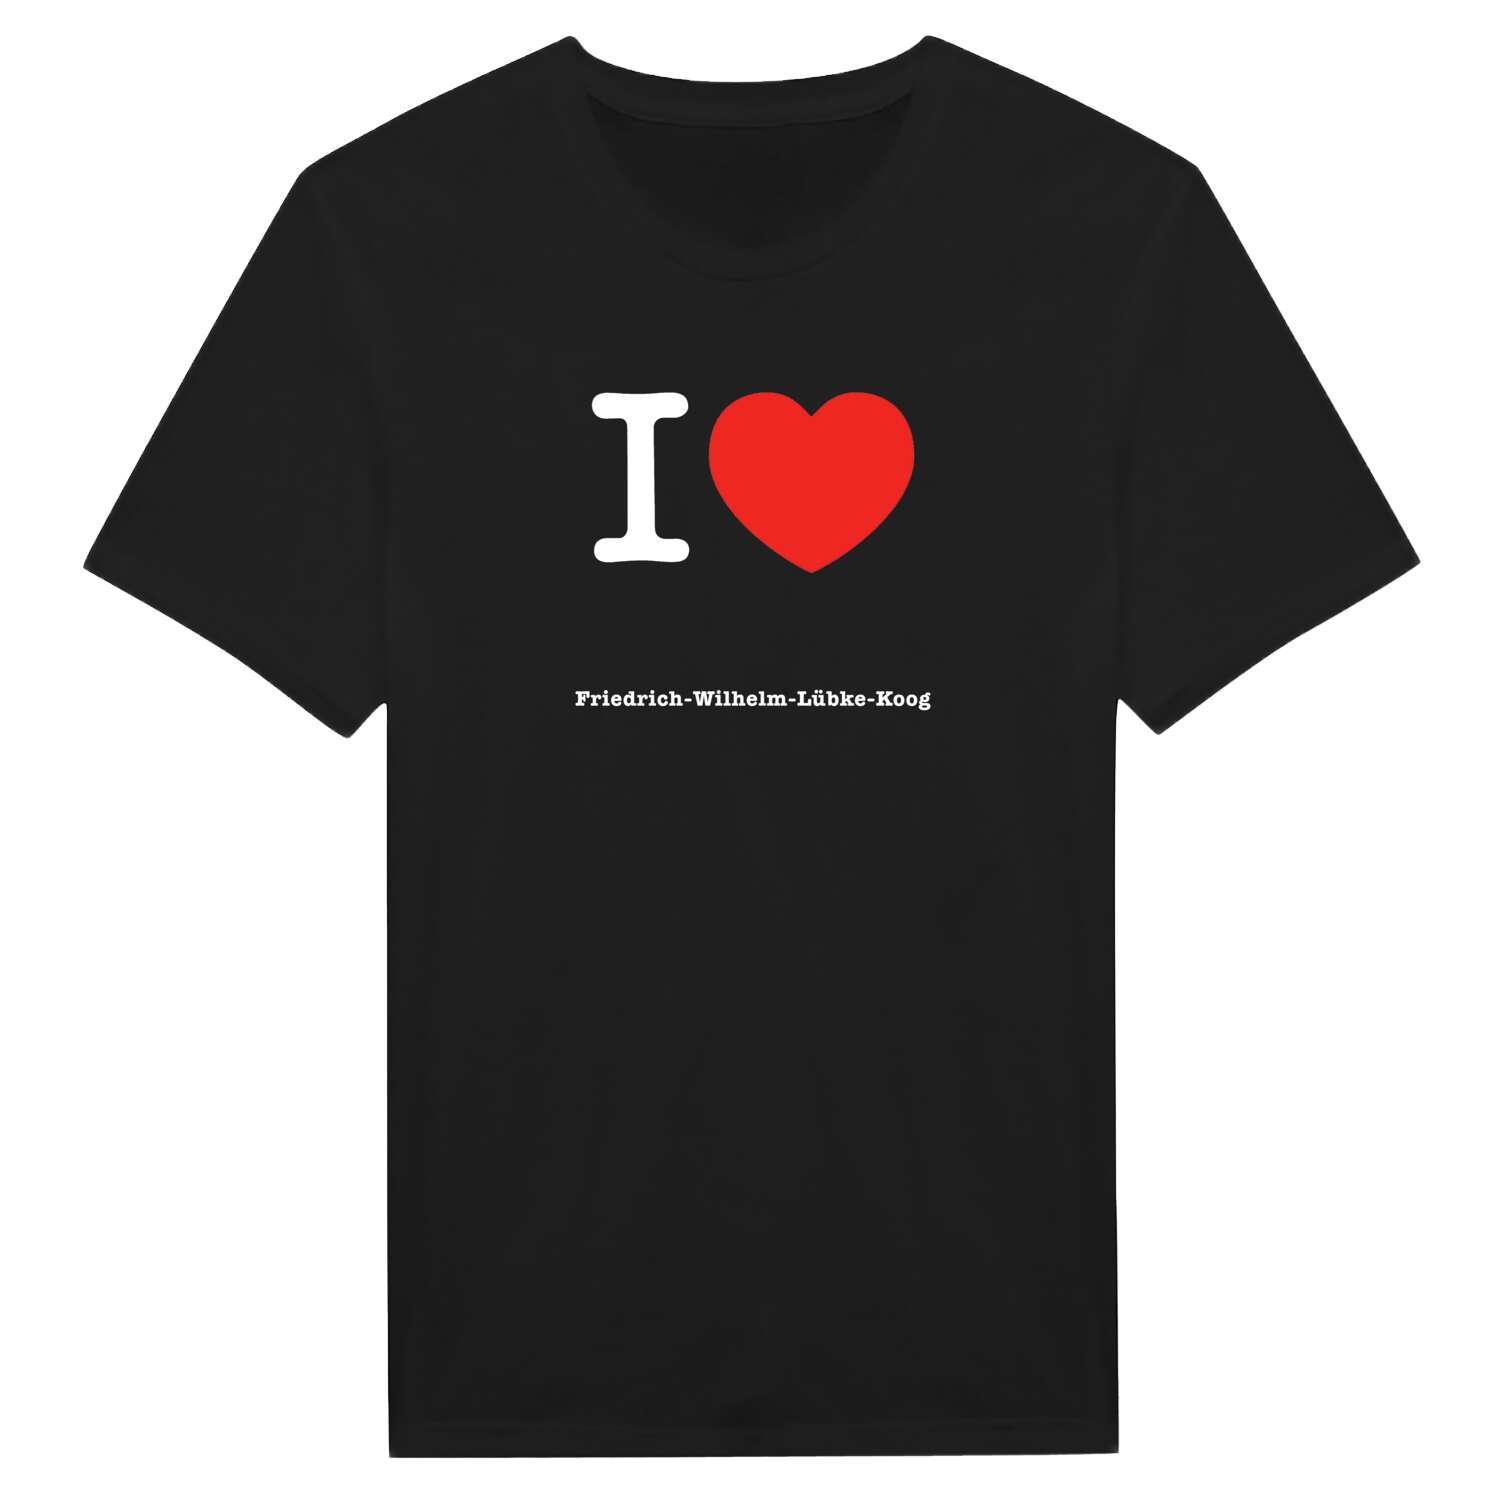 Friedrich-Wilhelm-Lübke-Koog T-Shirt »I love«